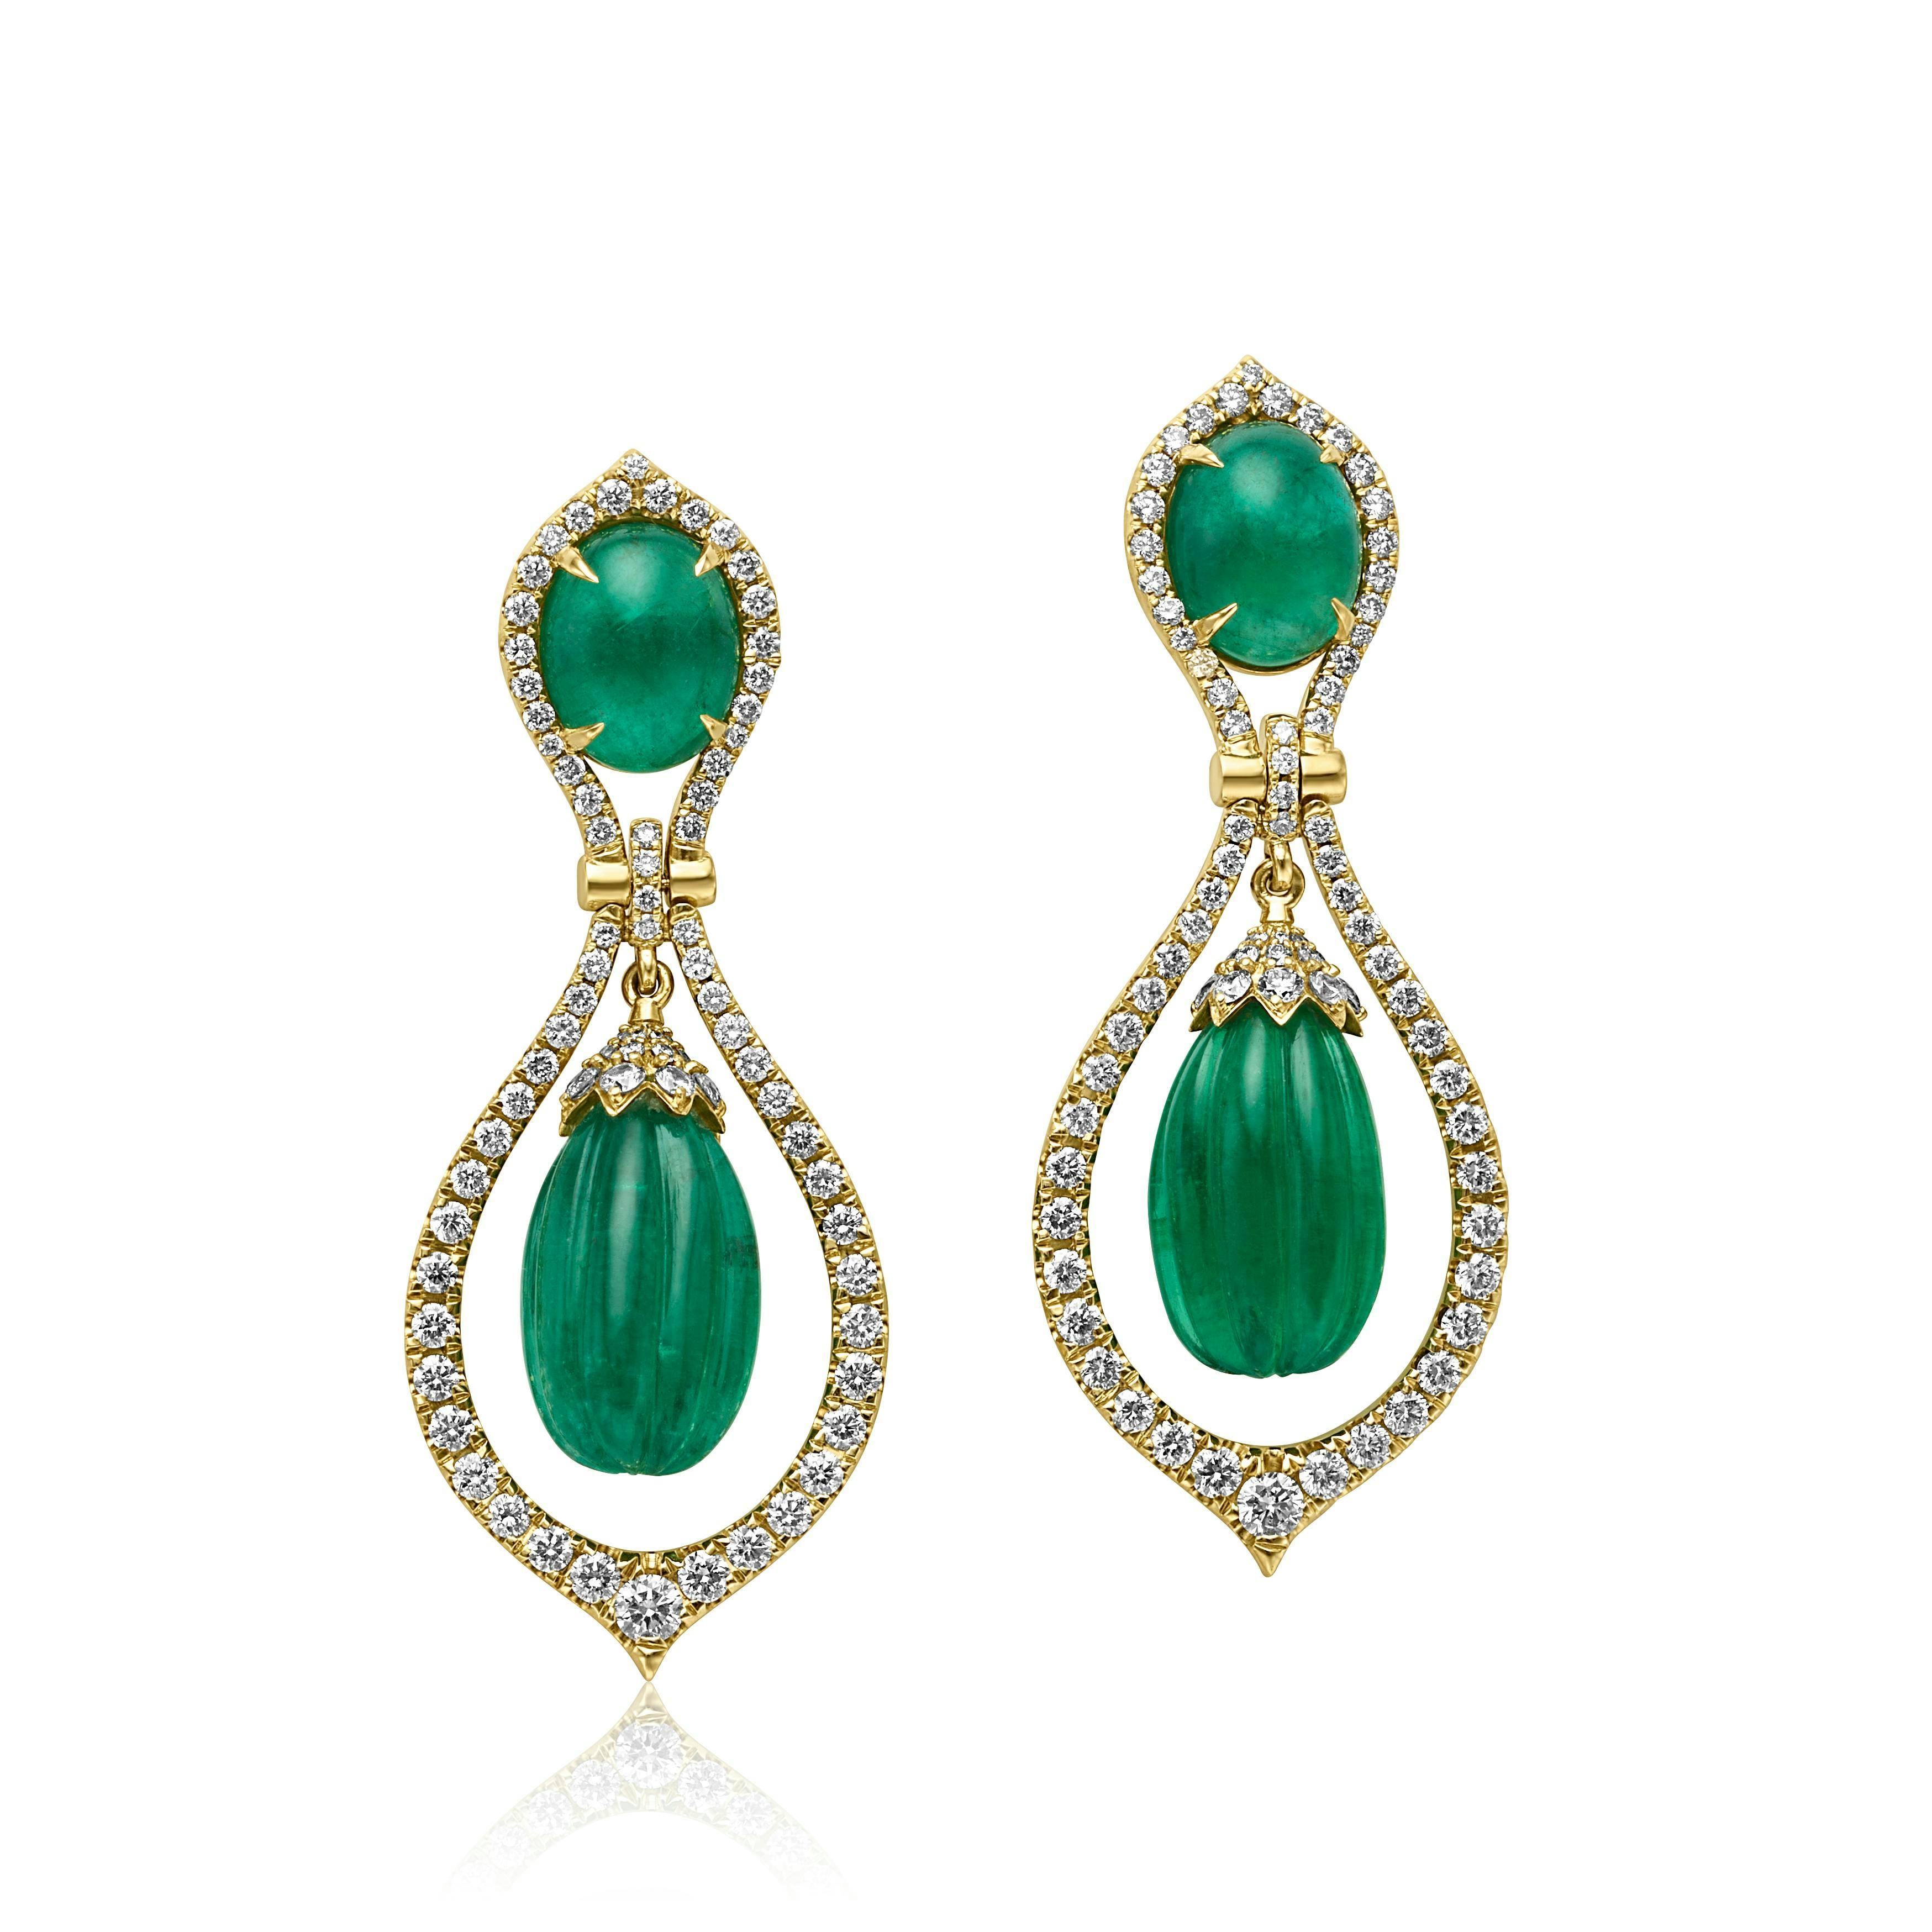 Goshwara emerald and diamond earrings